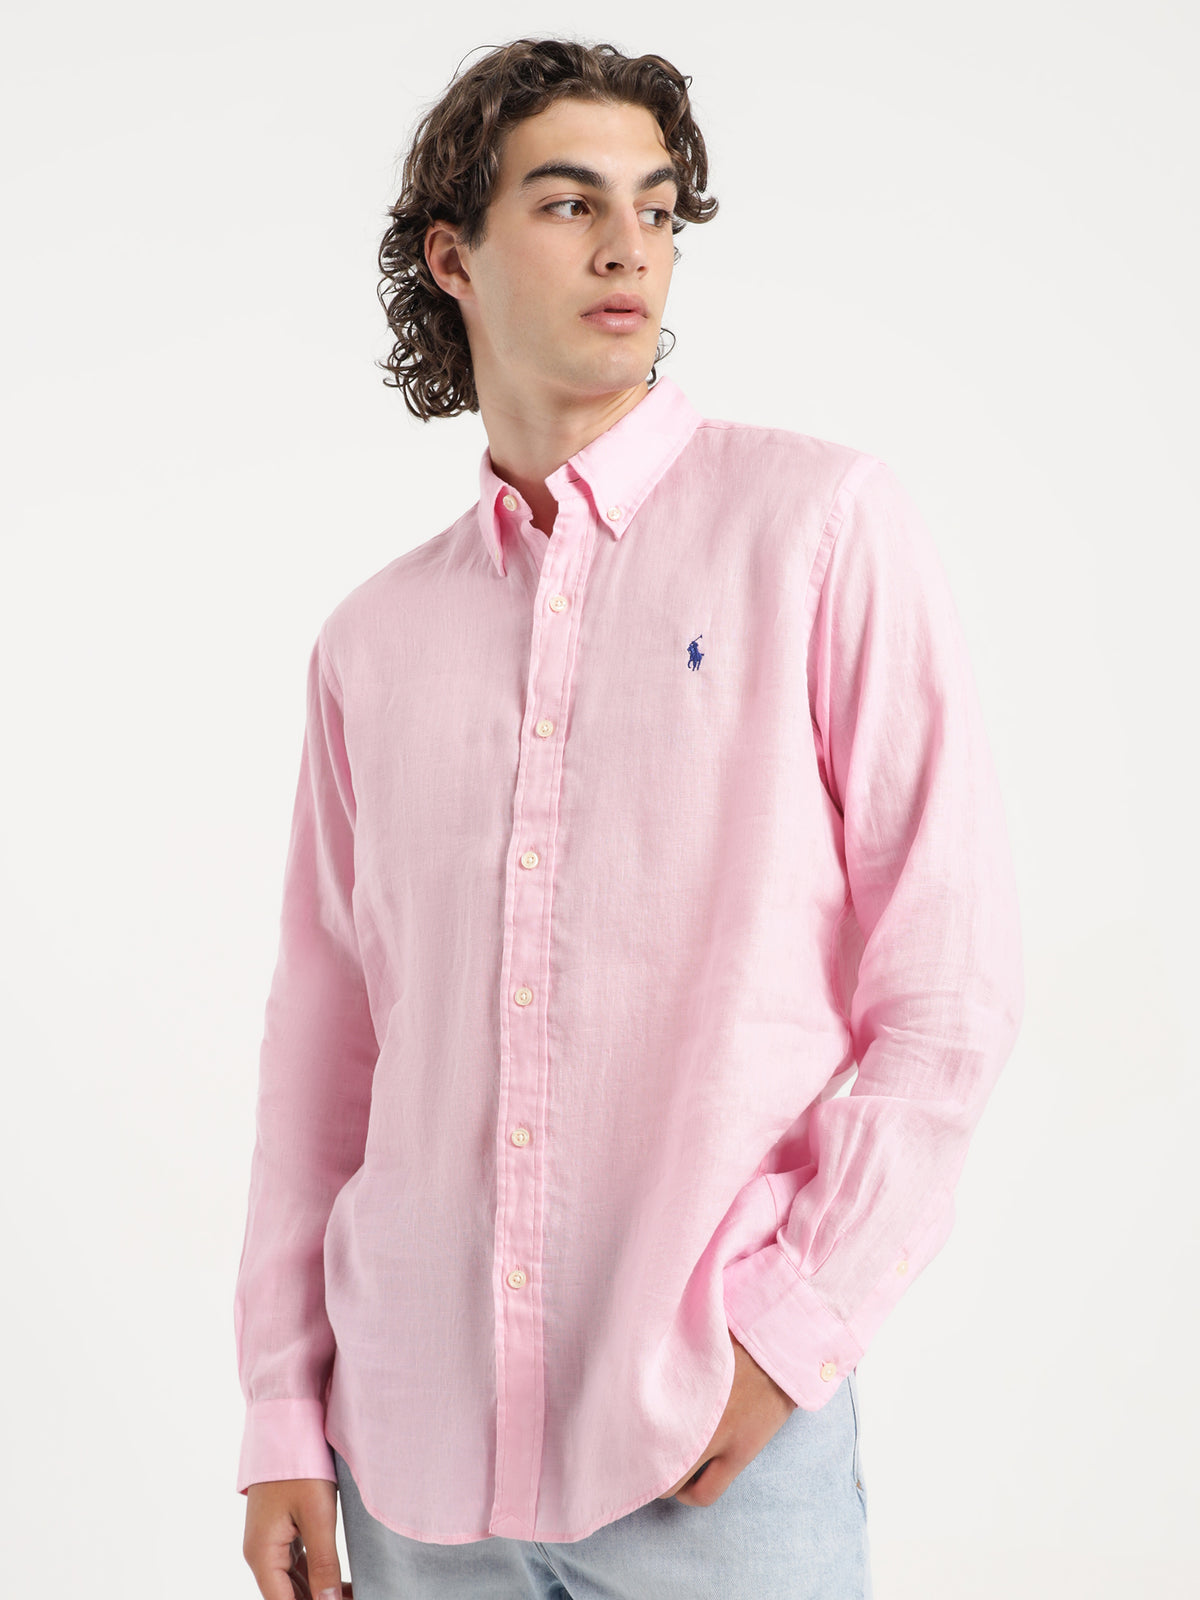 Long Sleeve Sport Button Up Shirt in Pink